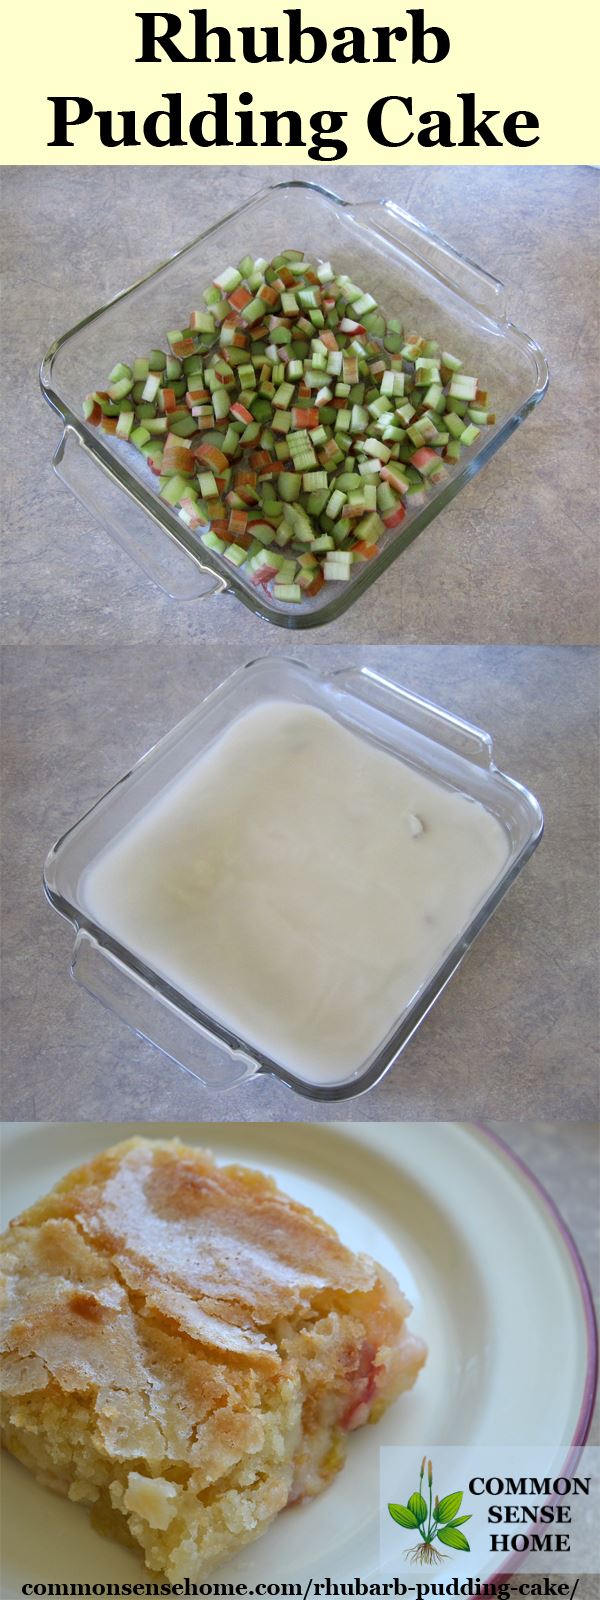 how to make rhubarb pudding cake step-by-step photos